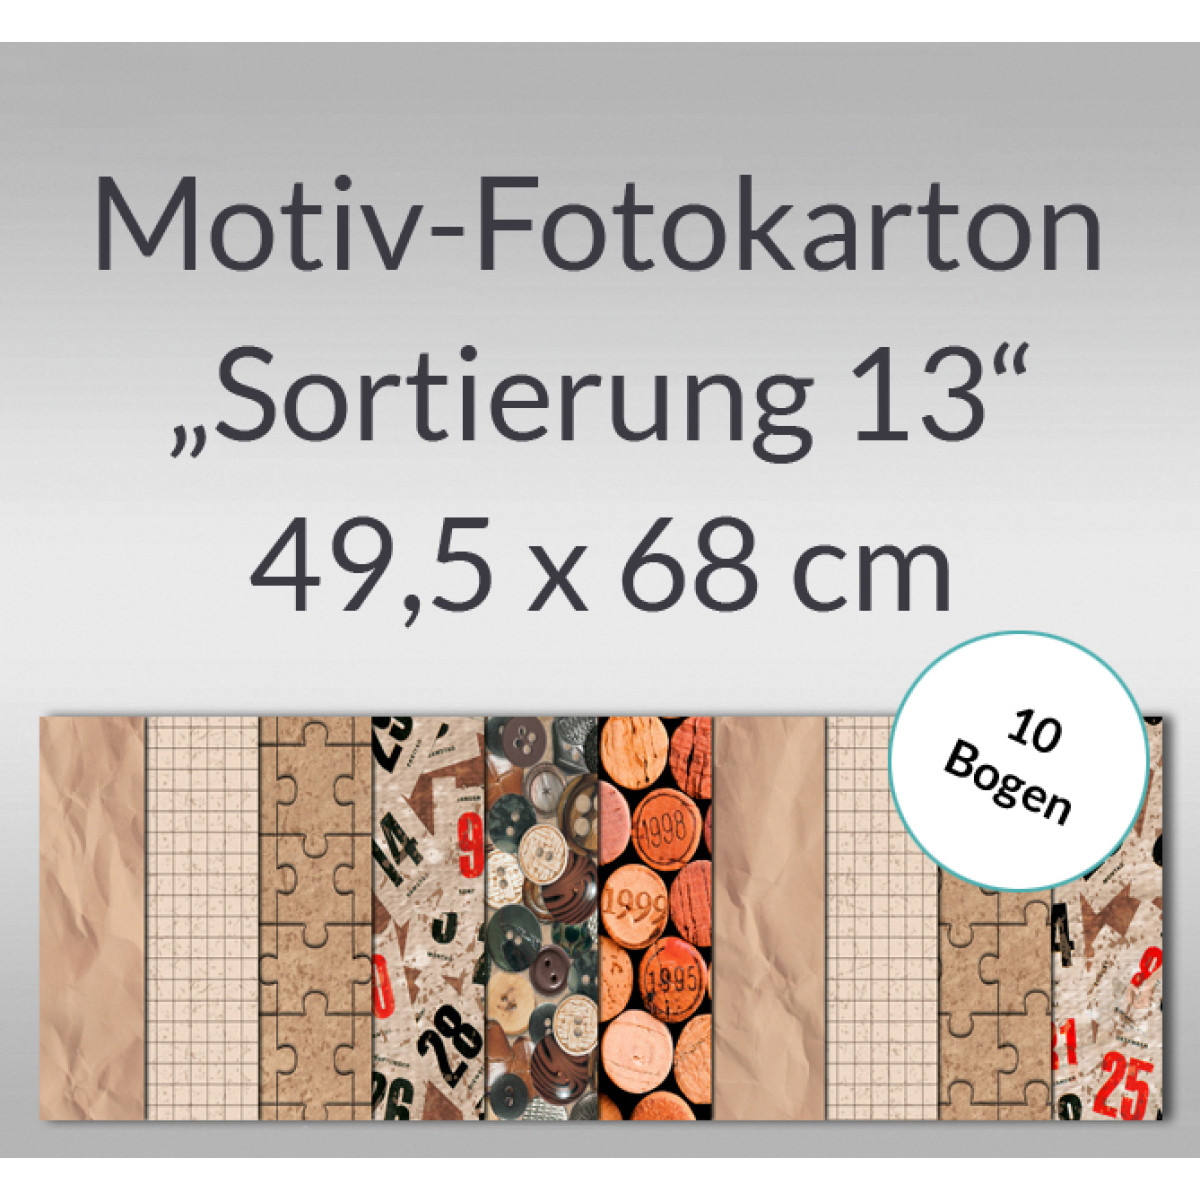 Motiv-Fotokarton "Sortierung 13" 49,5 x 68 cm - 10 Bogen